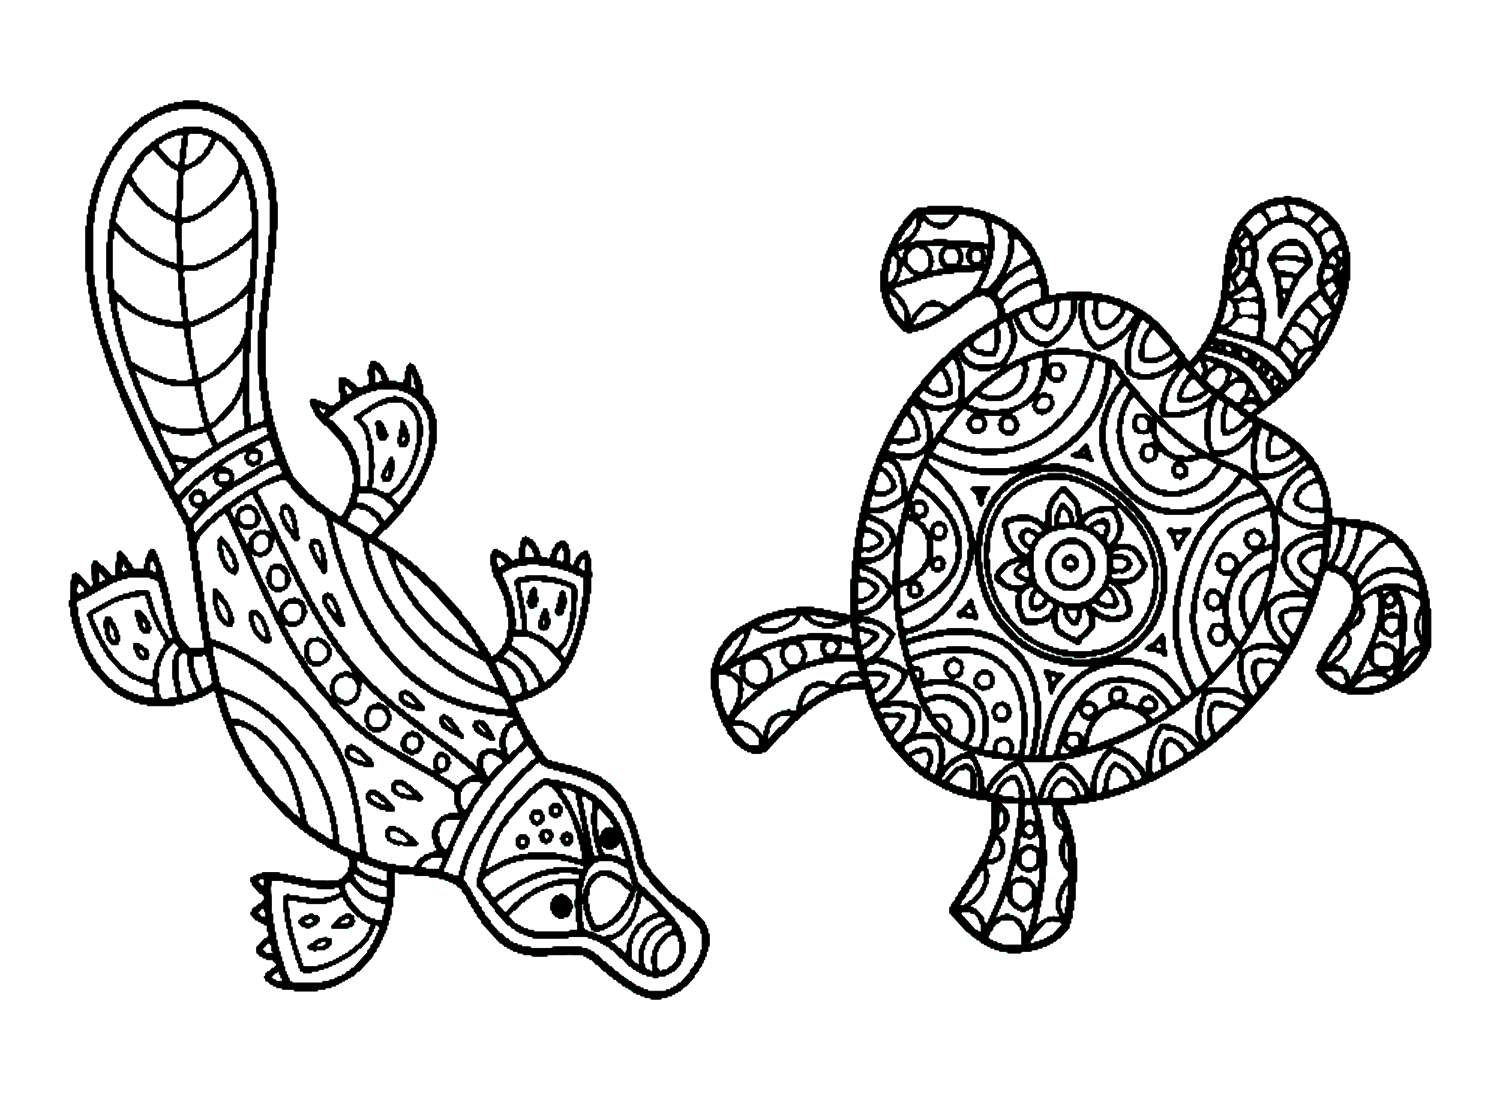 Mandala Ornitorinco e Tartaruga da Platypus